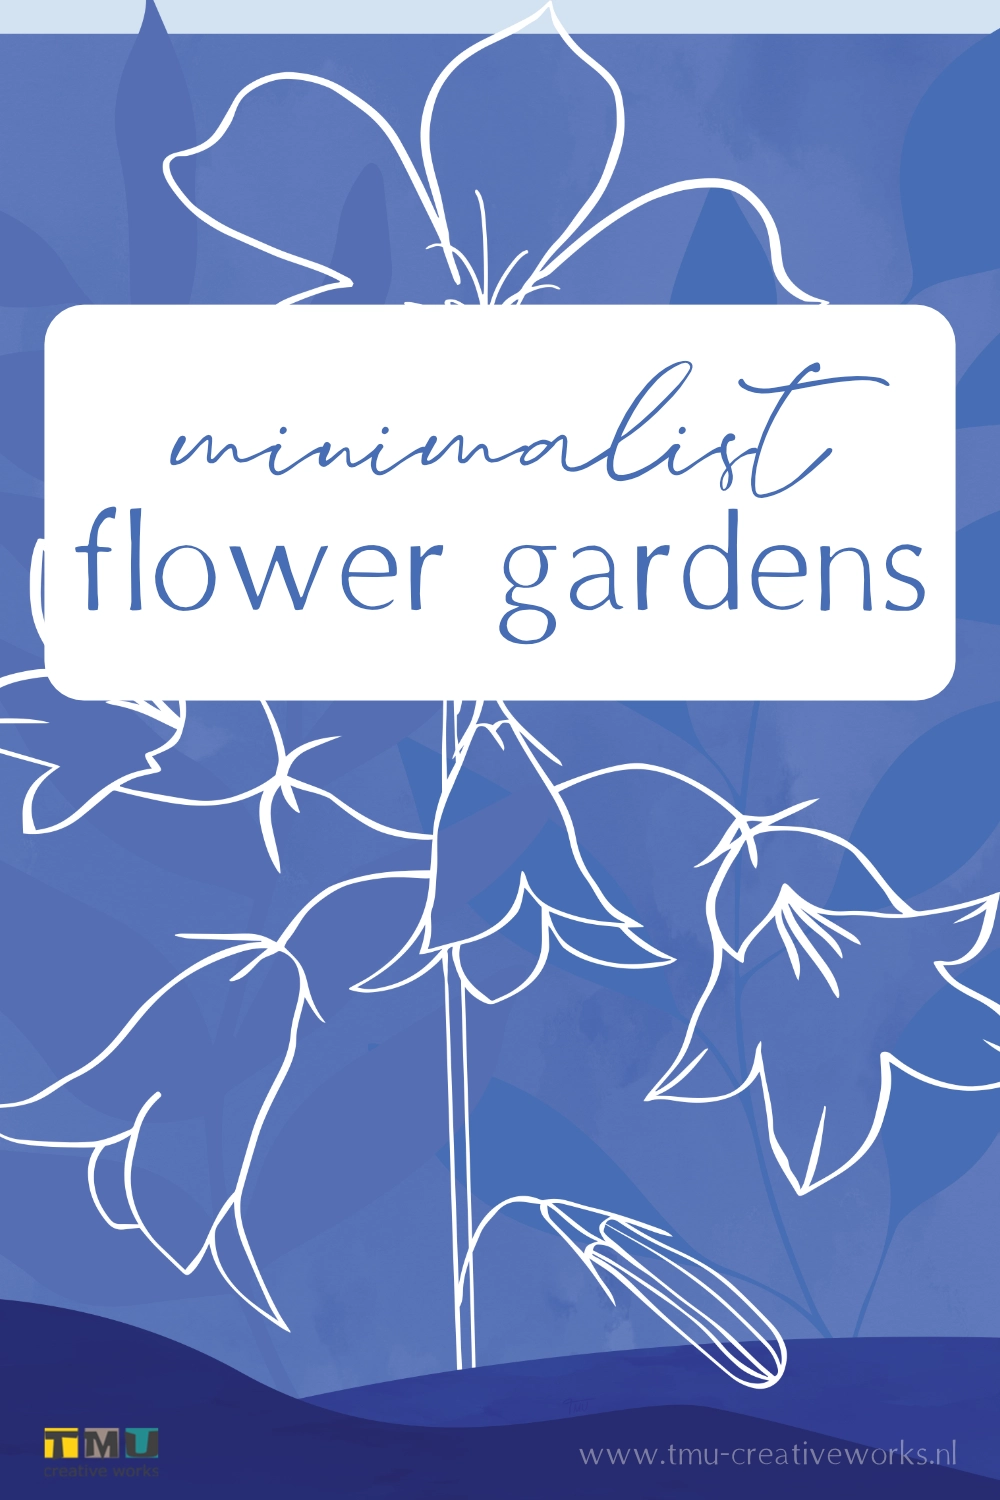 Series of minimalist flower gardens floral illustrations